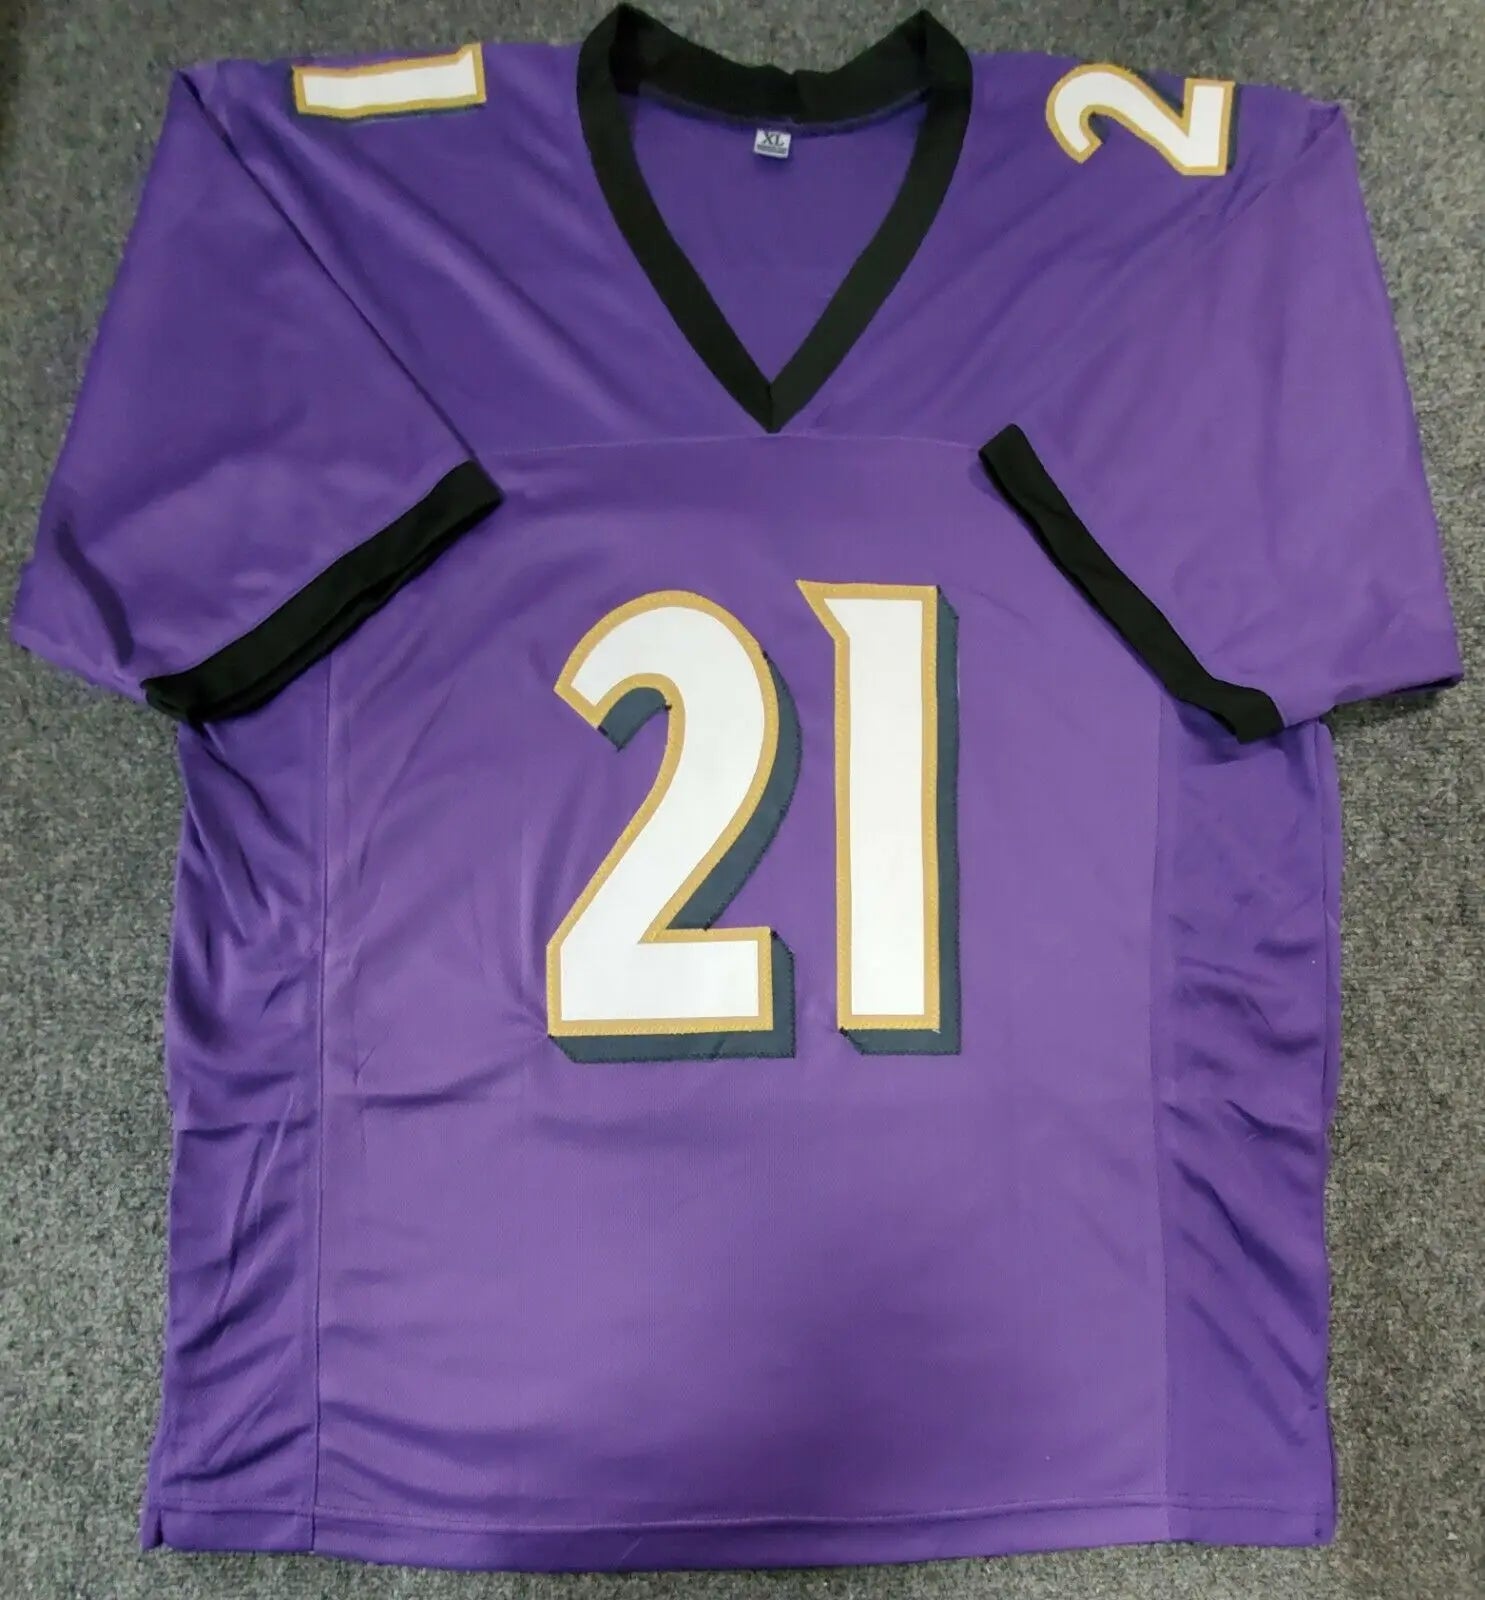 MVP Authentics Baltimore Ravens Chris Mcalister Autographed Signed Inscribed Jersey Jsa Coa 107.10 sports jersey framing , jersey framing